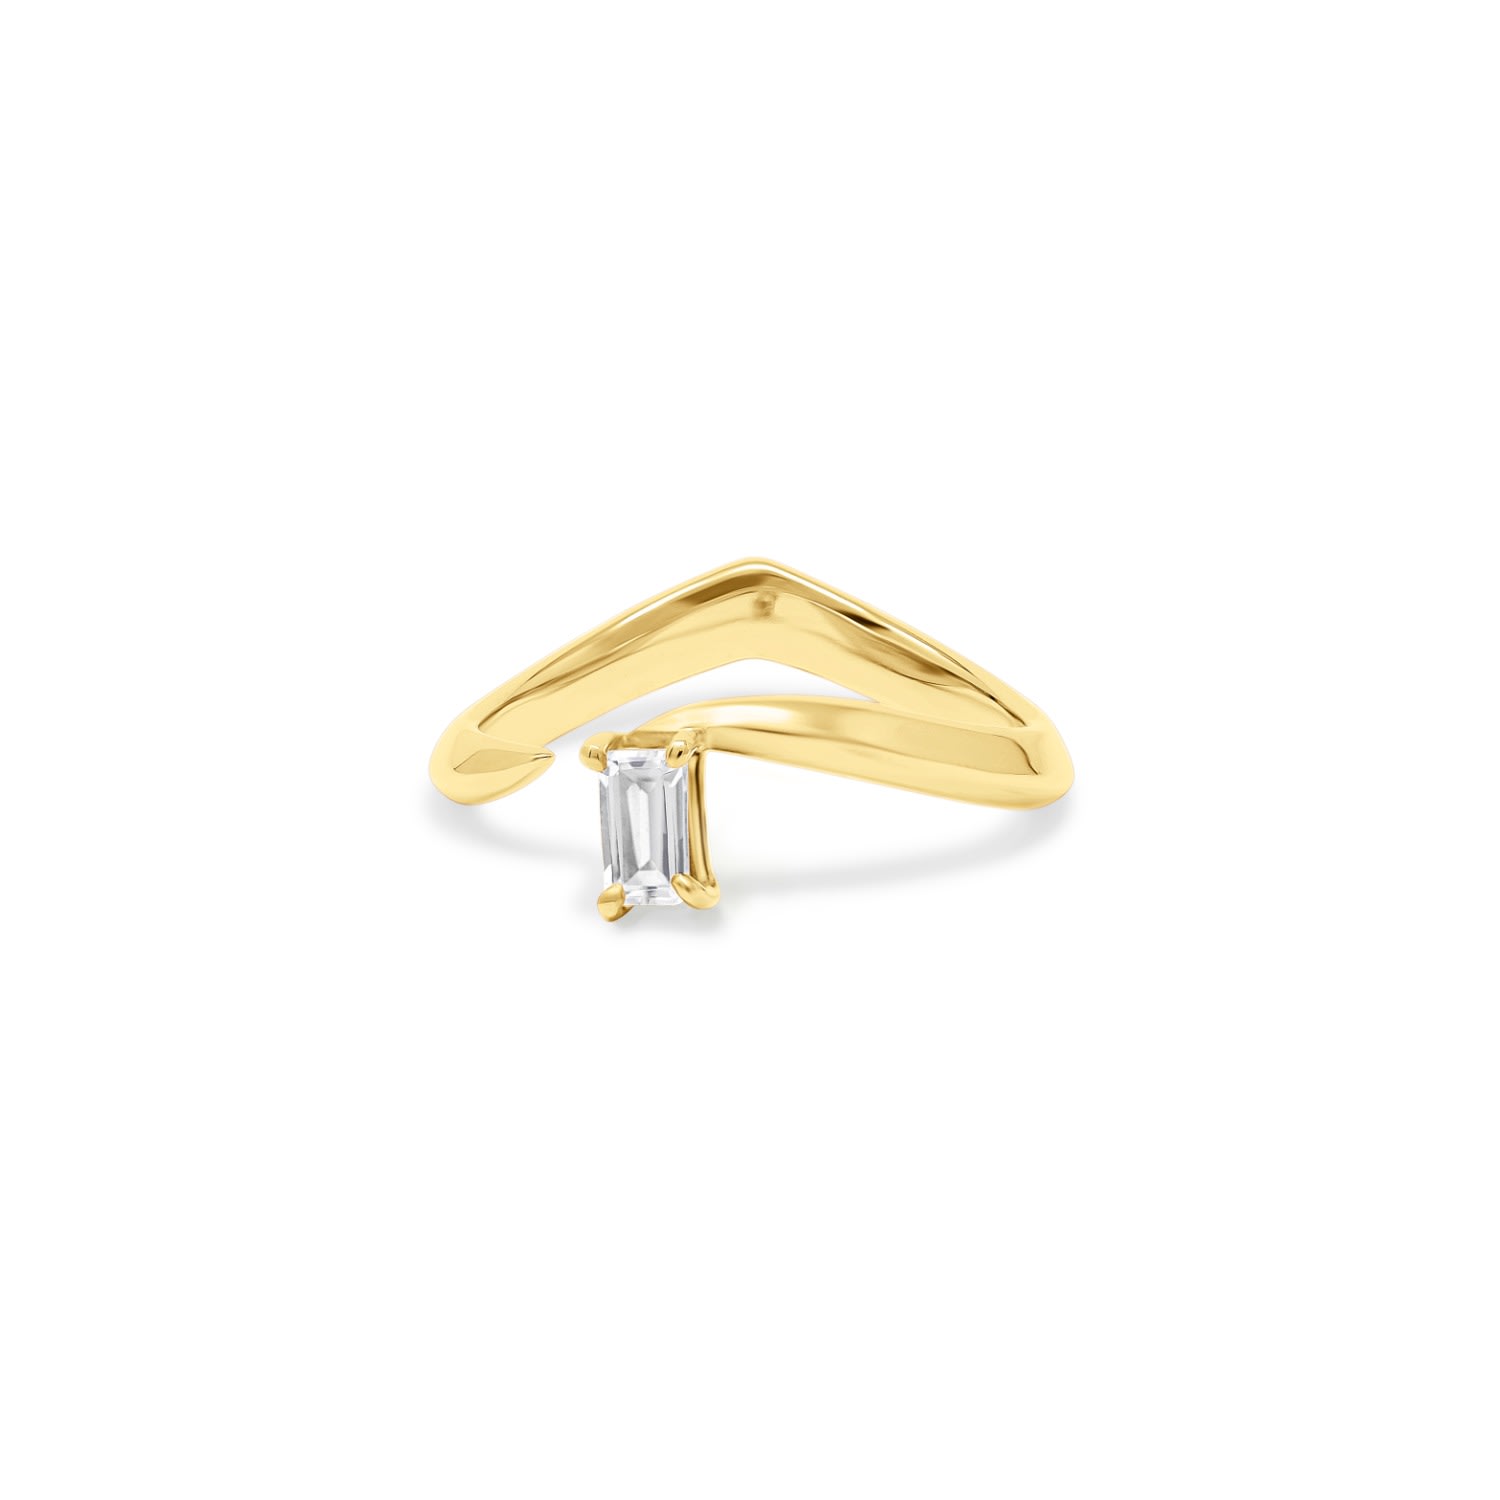 Women’s Tears Emerald Ring - 18K Yellow Gold Vermeil Edx